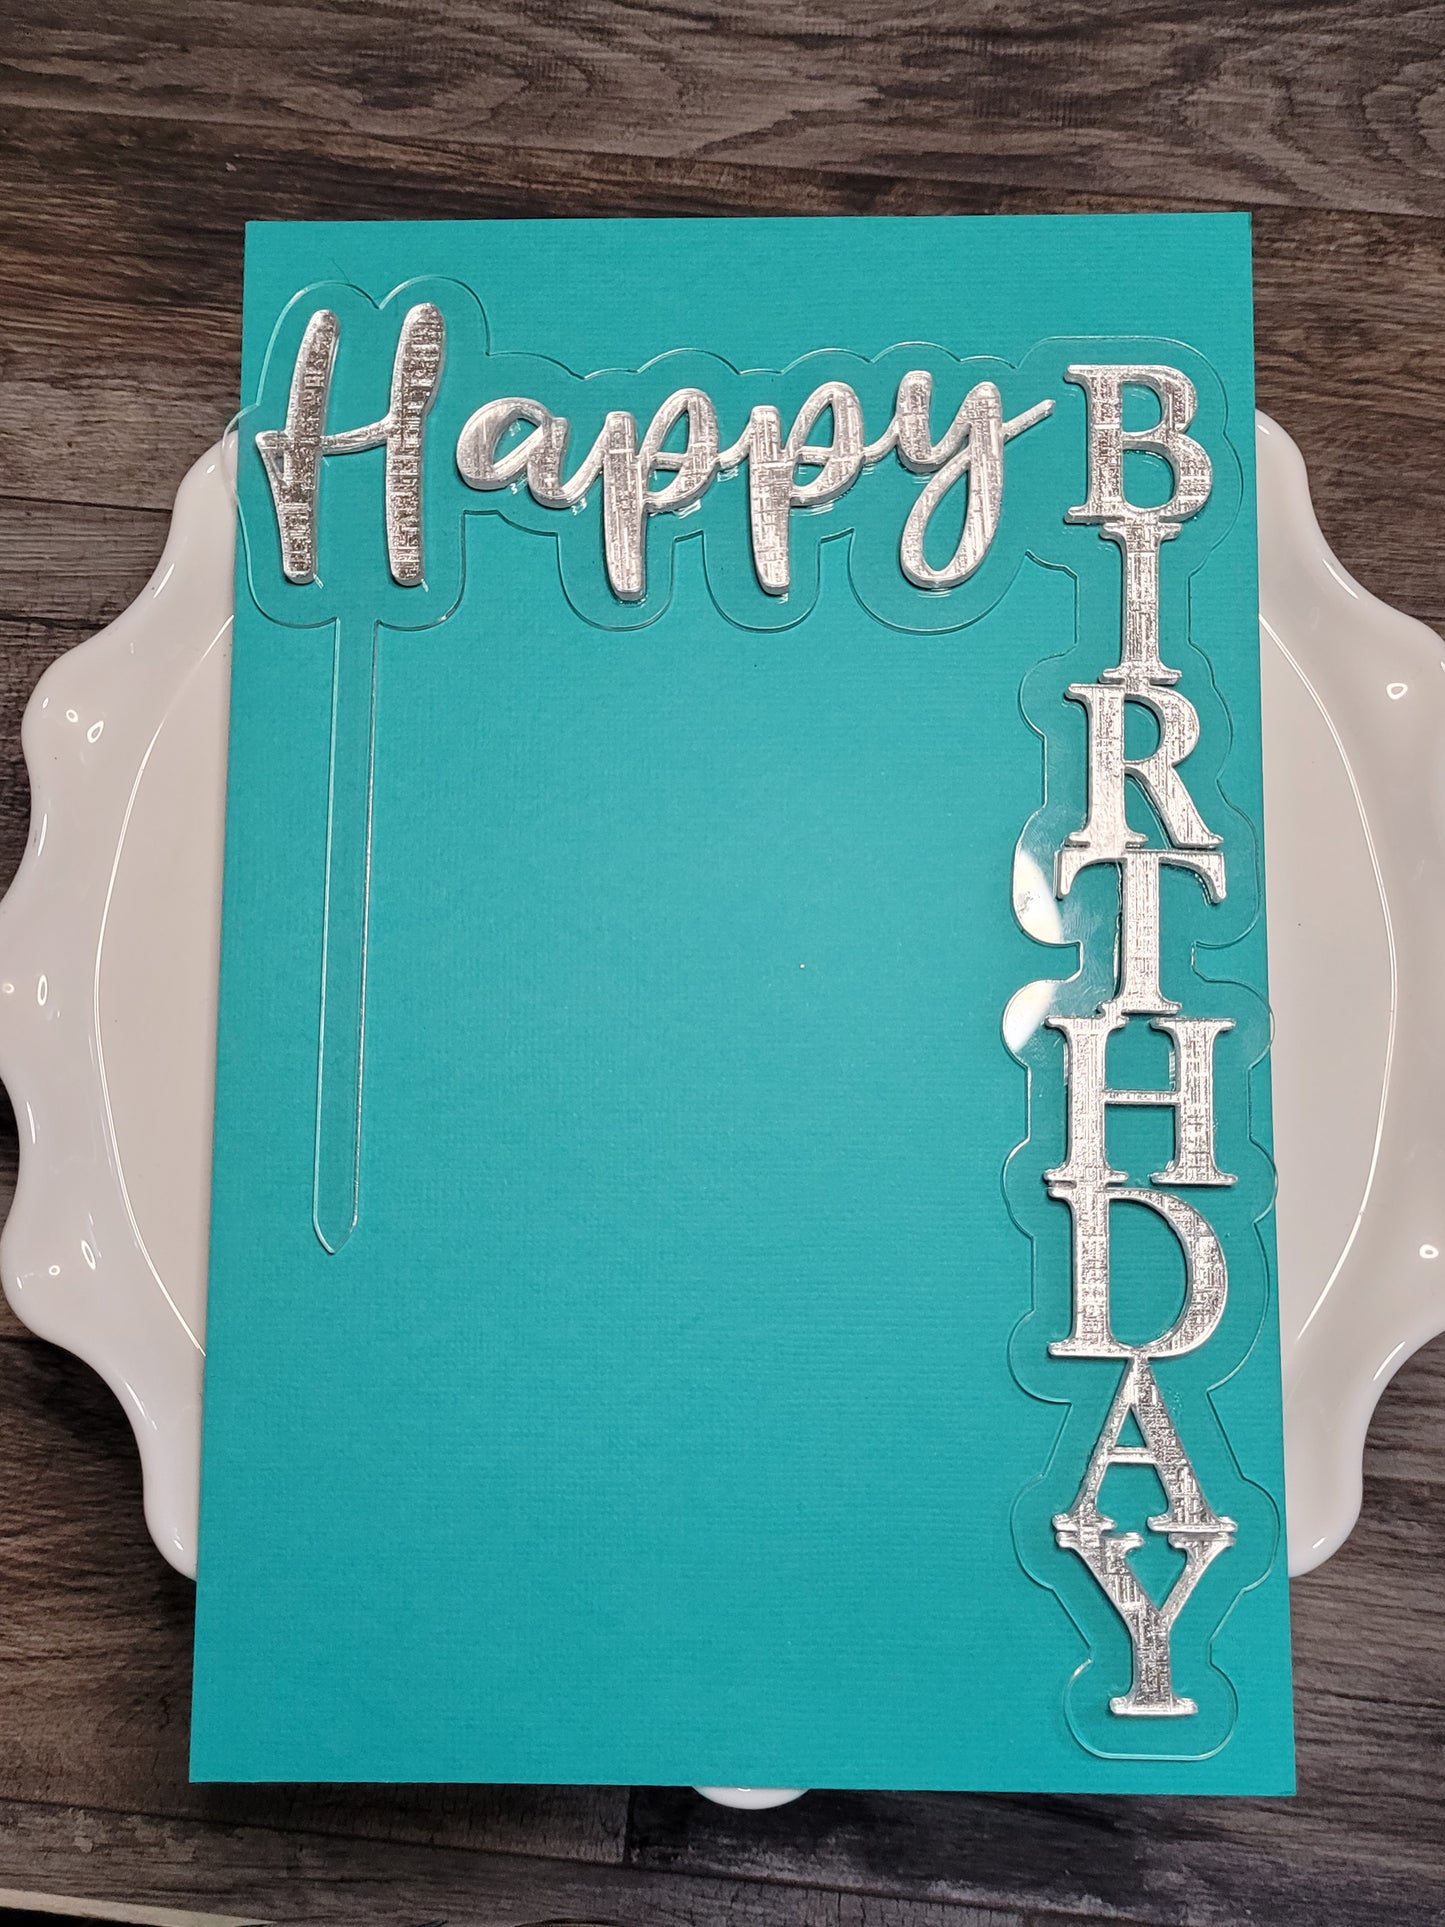 Happy Birthday - Acrylic Waterfall - Cake Topper